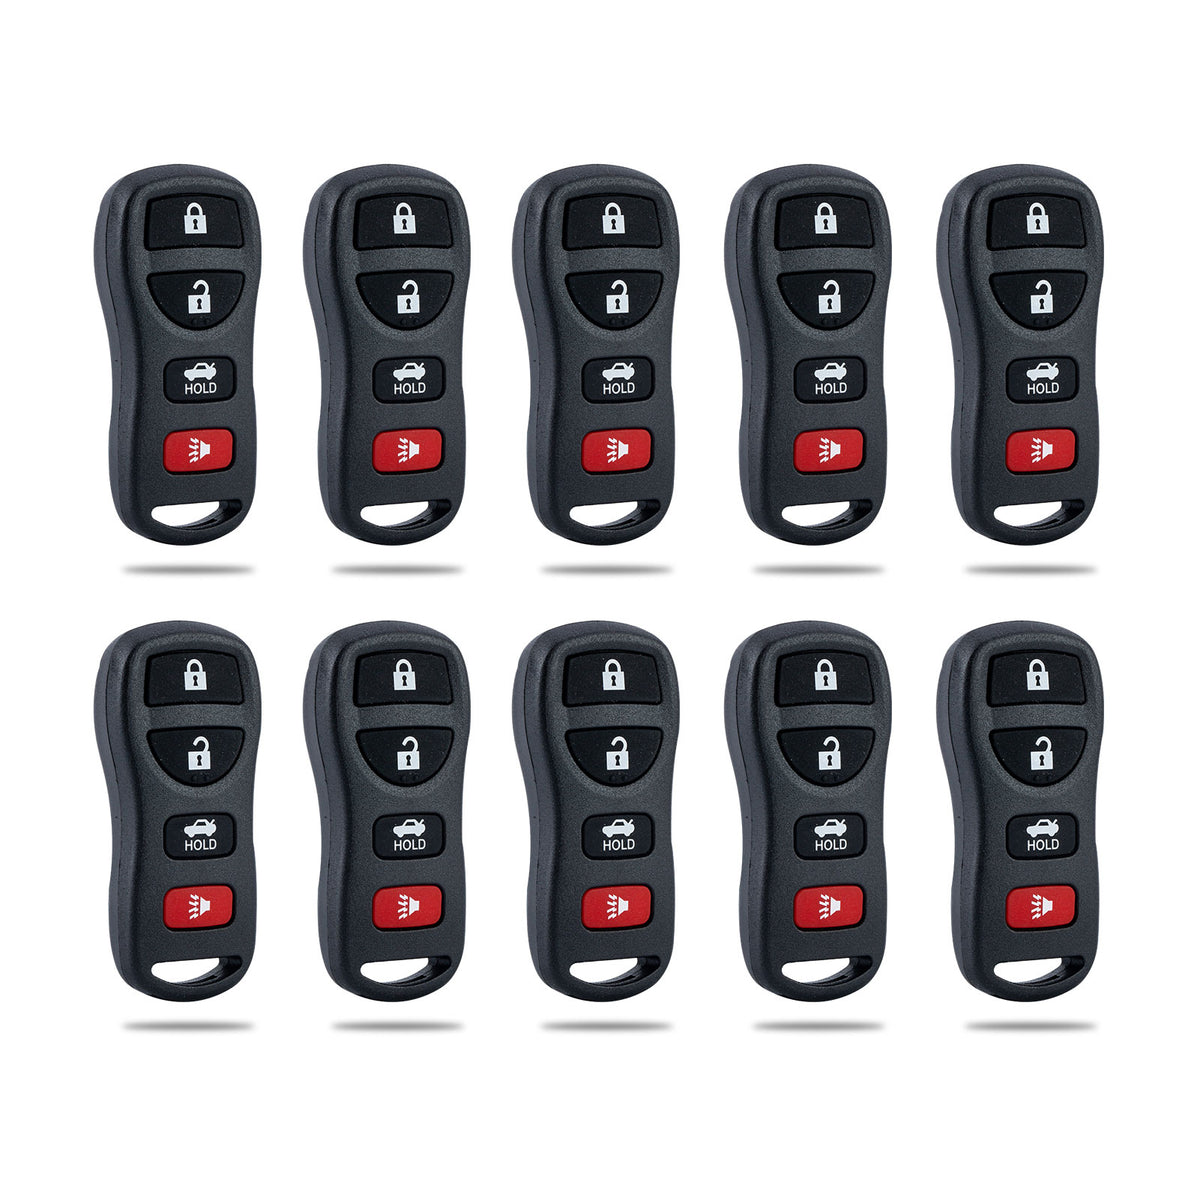 4 Button Car Key Fob Replacement for Nissan Infiniti Altima Armada Maxima Quest Sentra 350Z| EX35 FX35 FX45 I35 G35 QX56 KBRSTU15 KR-N4RA